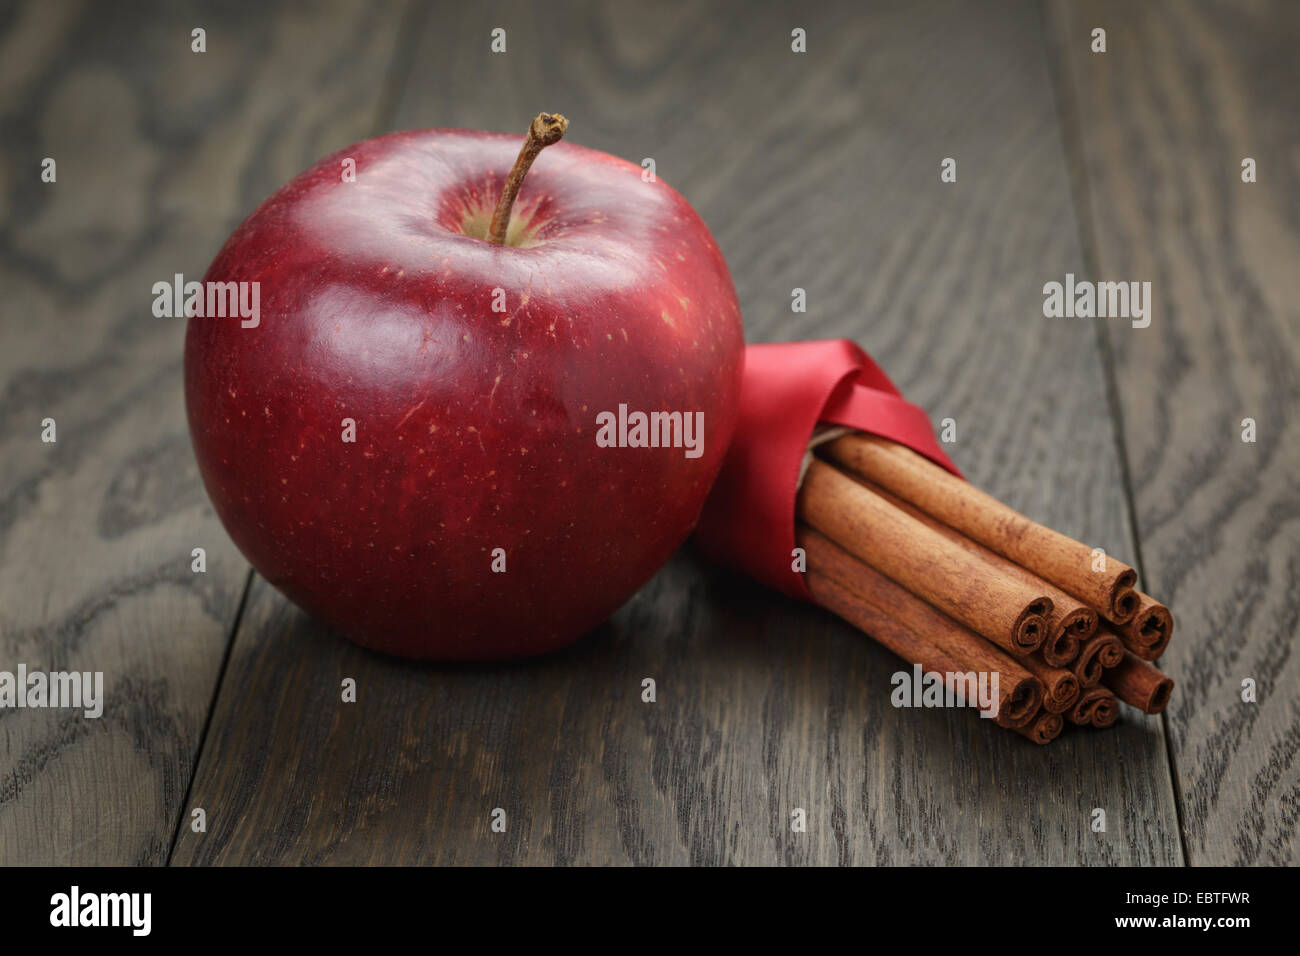 https://c8.alamy.com/comp/EBTFWR/red-ripe-apple-and-cinnamon-on-old-oak-table-EBTFWR.jpg